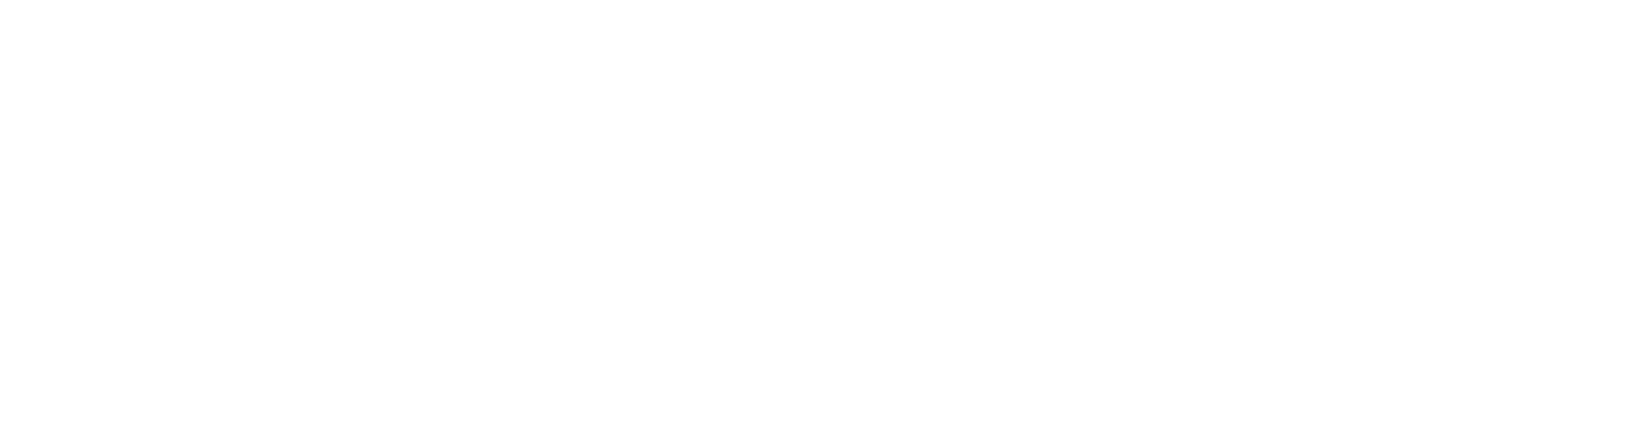 Charis Logo